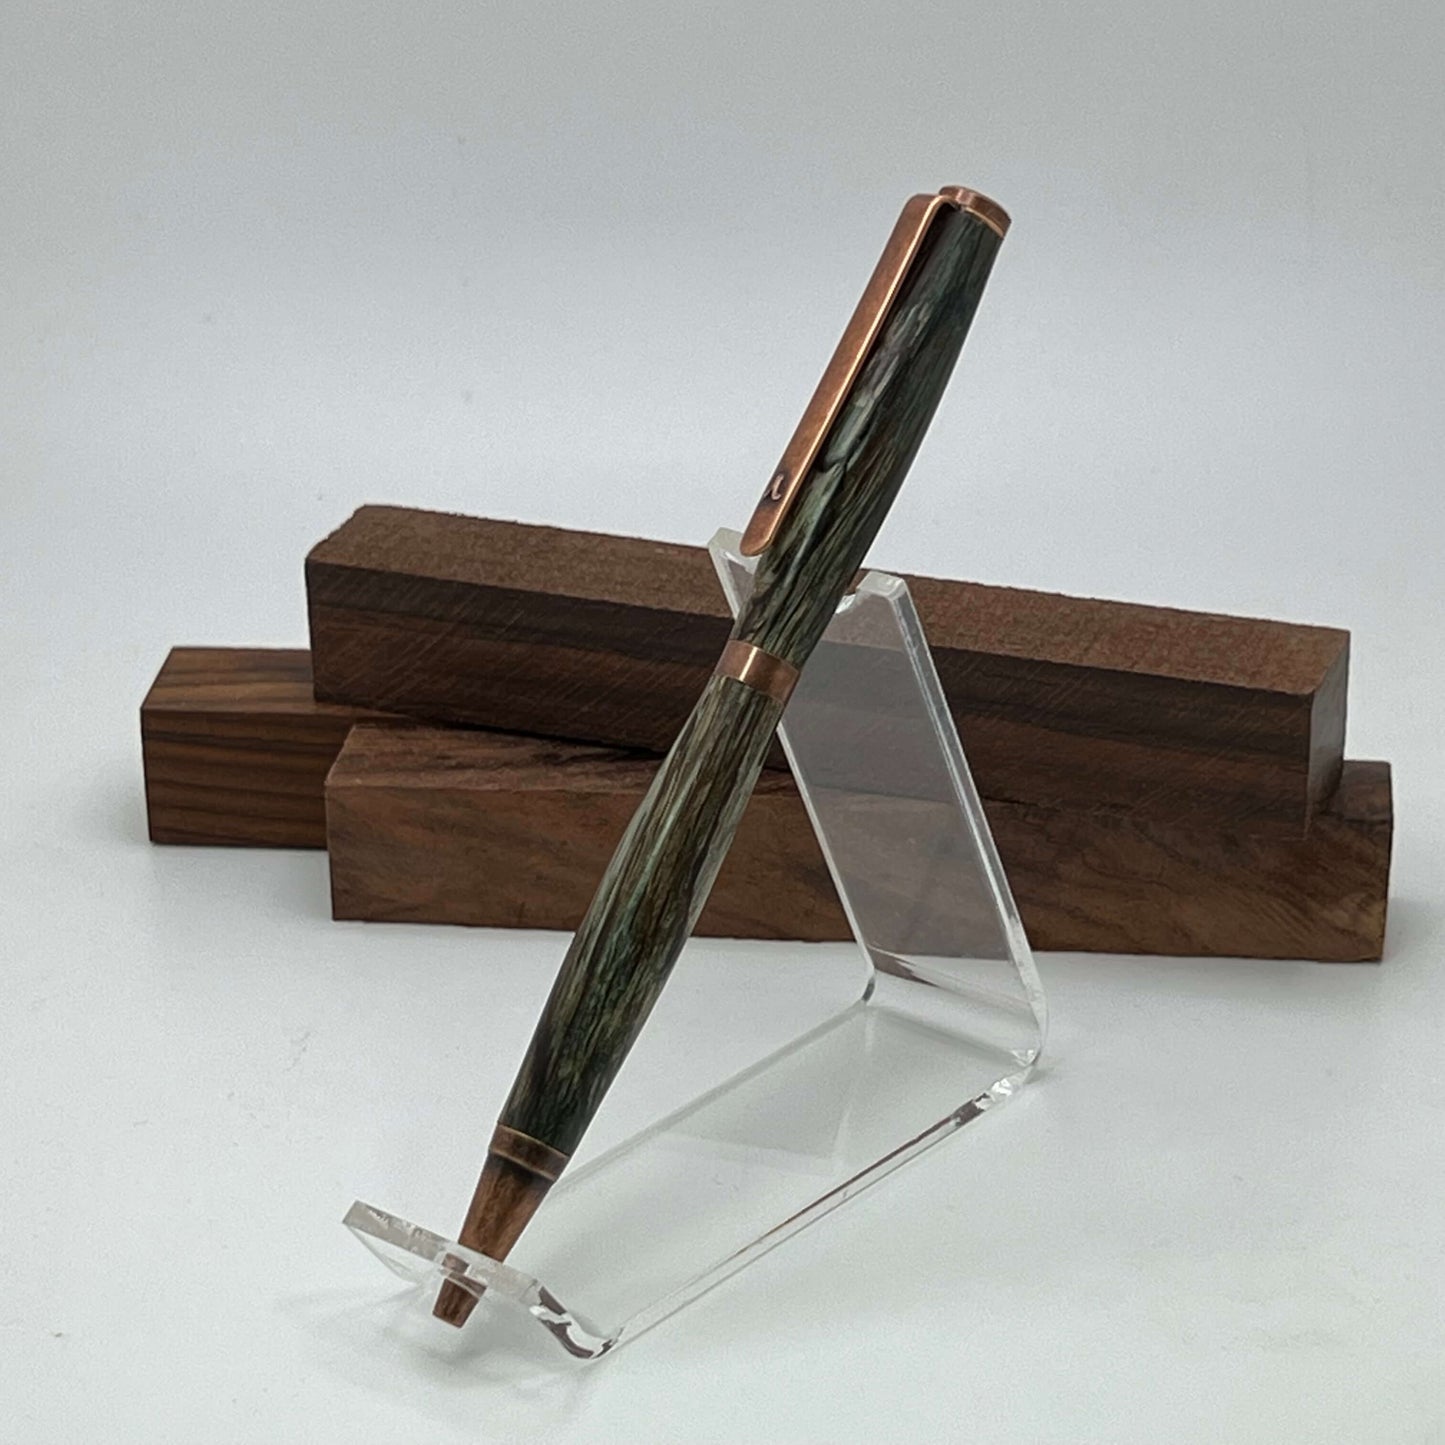 Handcrafted Antique Copper Slimline Pen